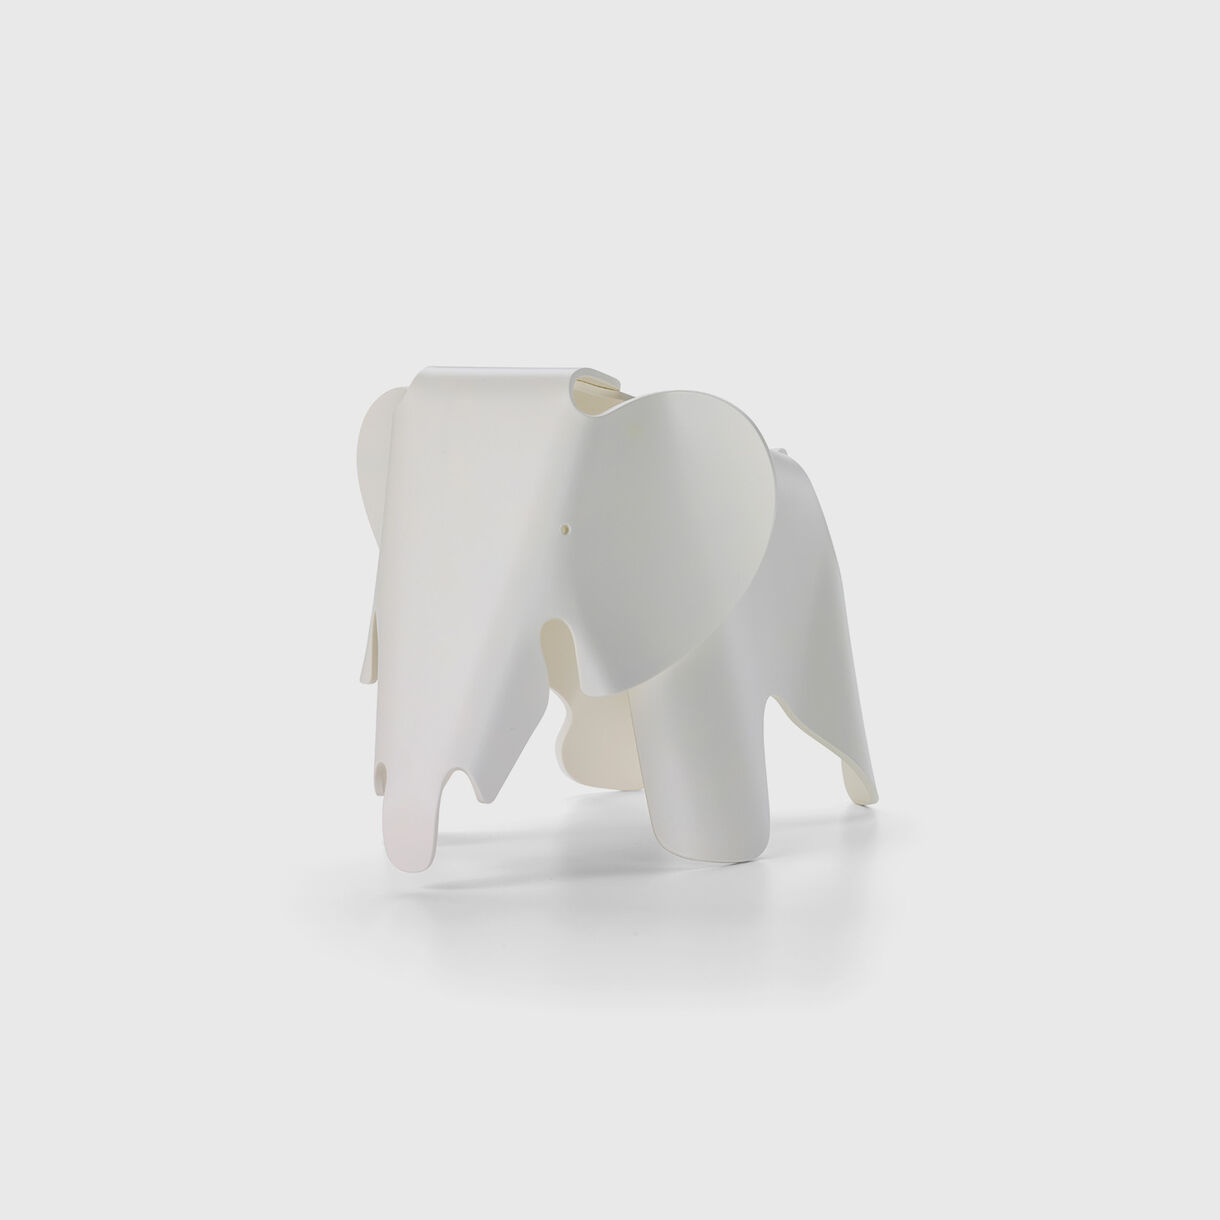 Eames Elephant Small, White